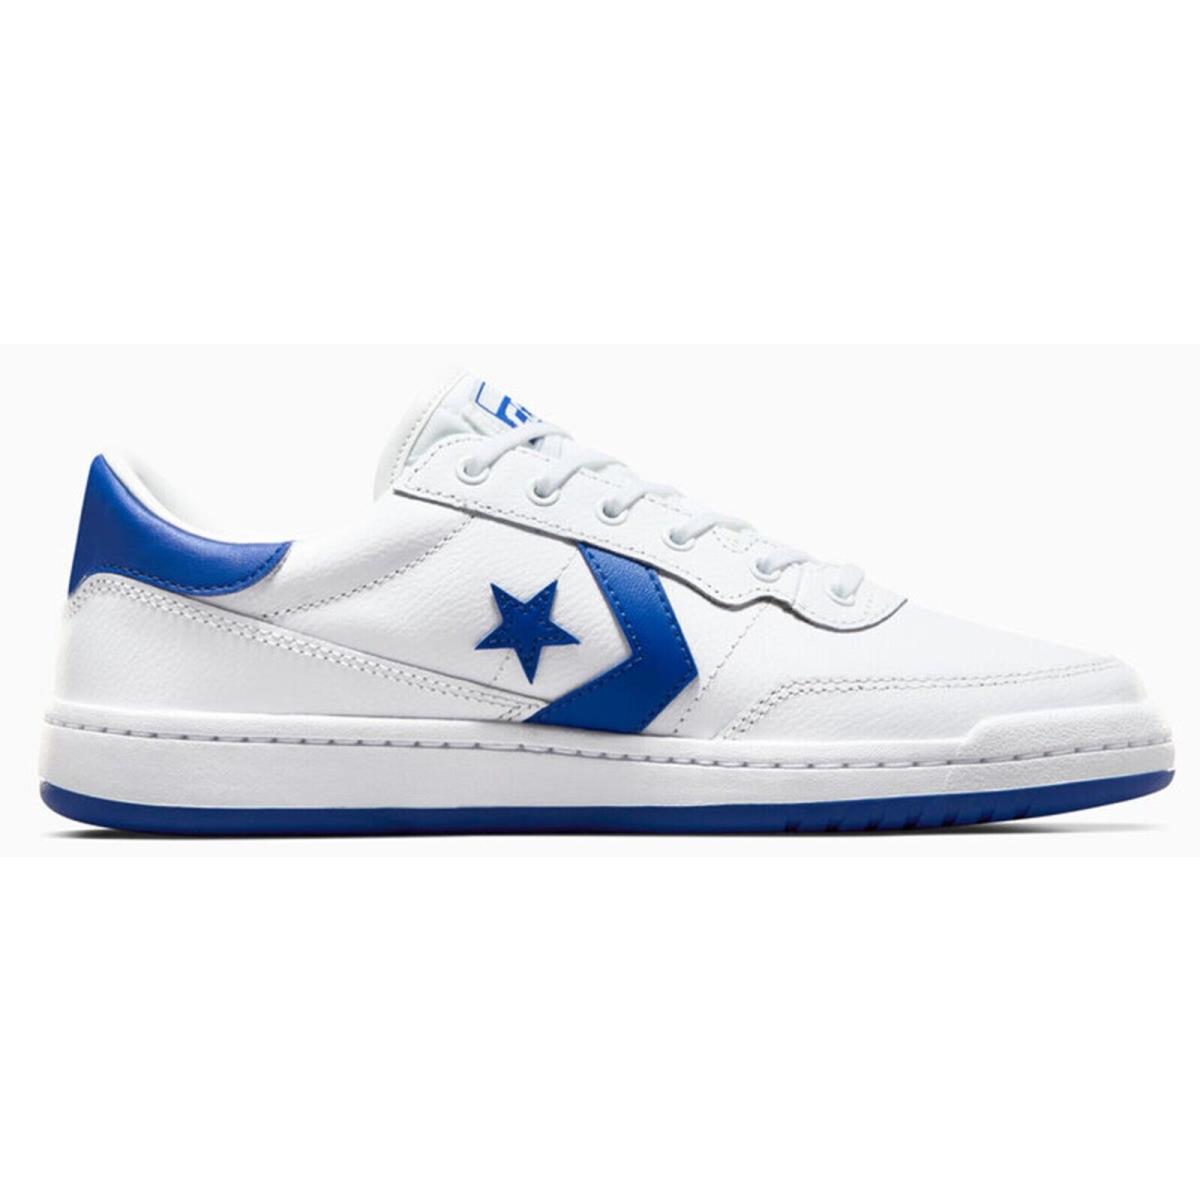 Converse Men`s Cons Fastbreak Pro Premium Leather Sport Sneakers Shoes Retro 83 White/Blue/White